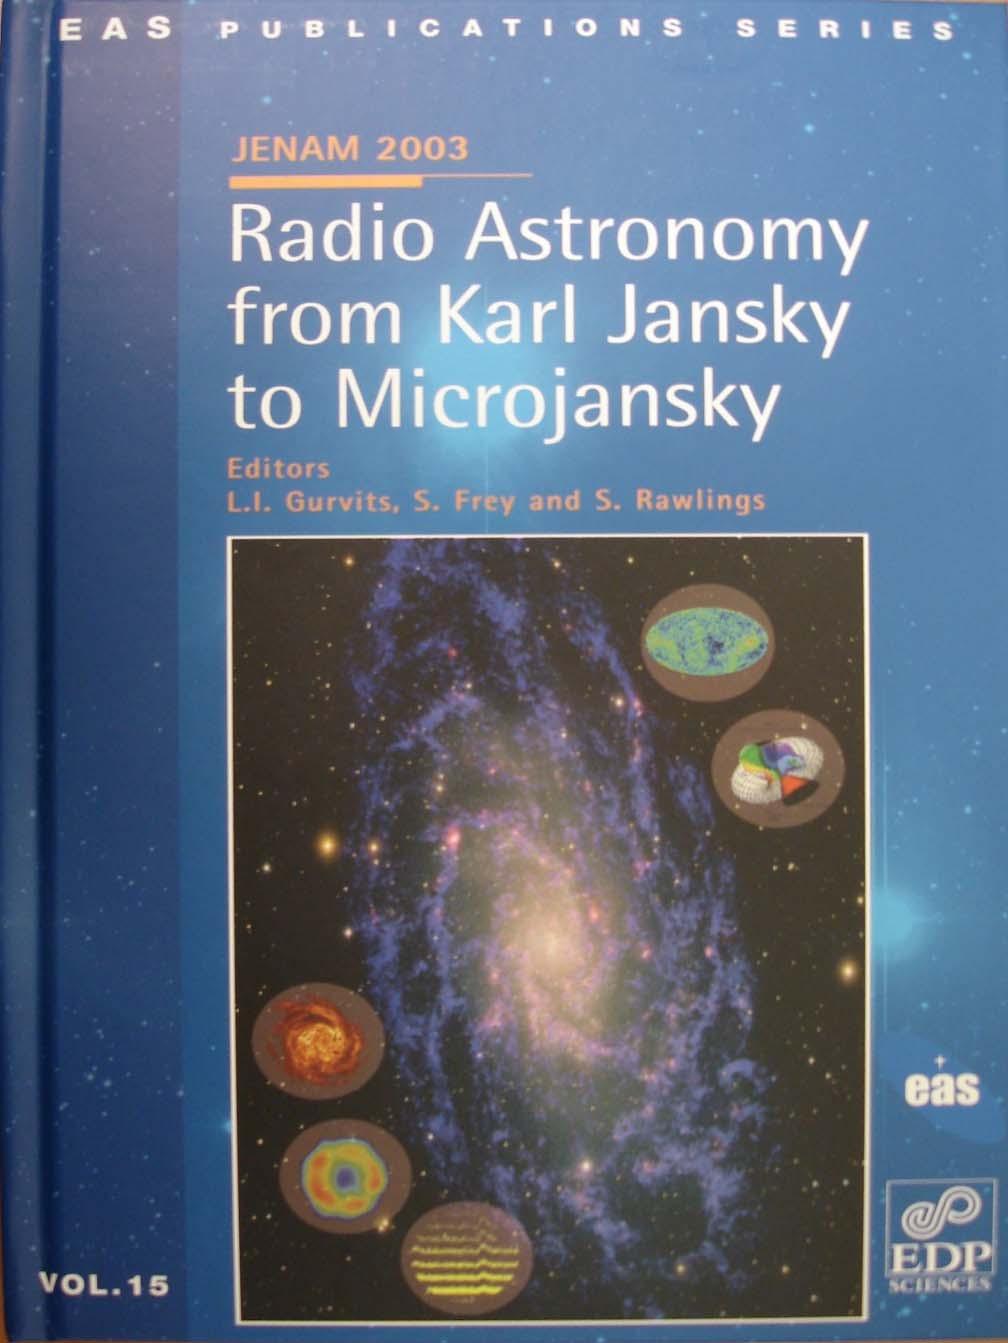 Useful reading on radio interferometry B. Burke, F. Graham-Smith An introduction to Radio Astronomy A.R. Thompson, J.M. Moran, G.W.